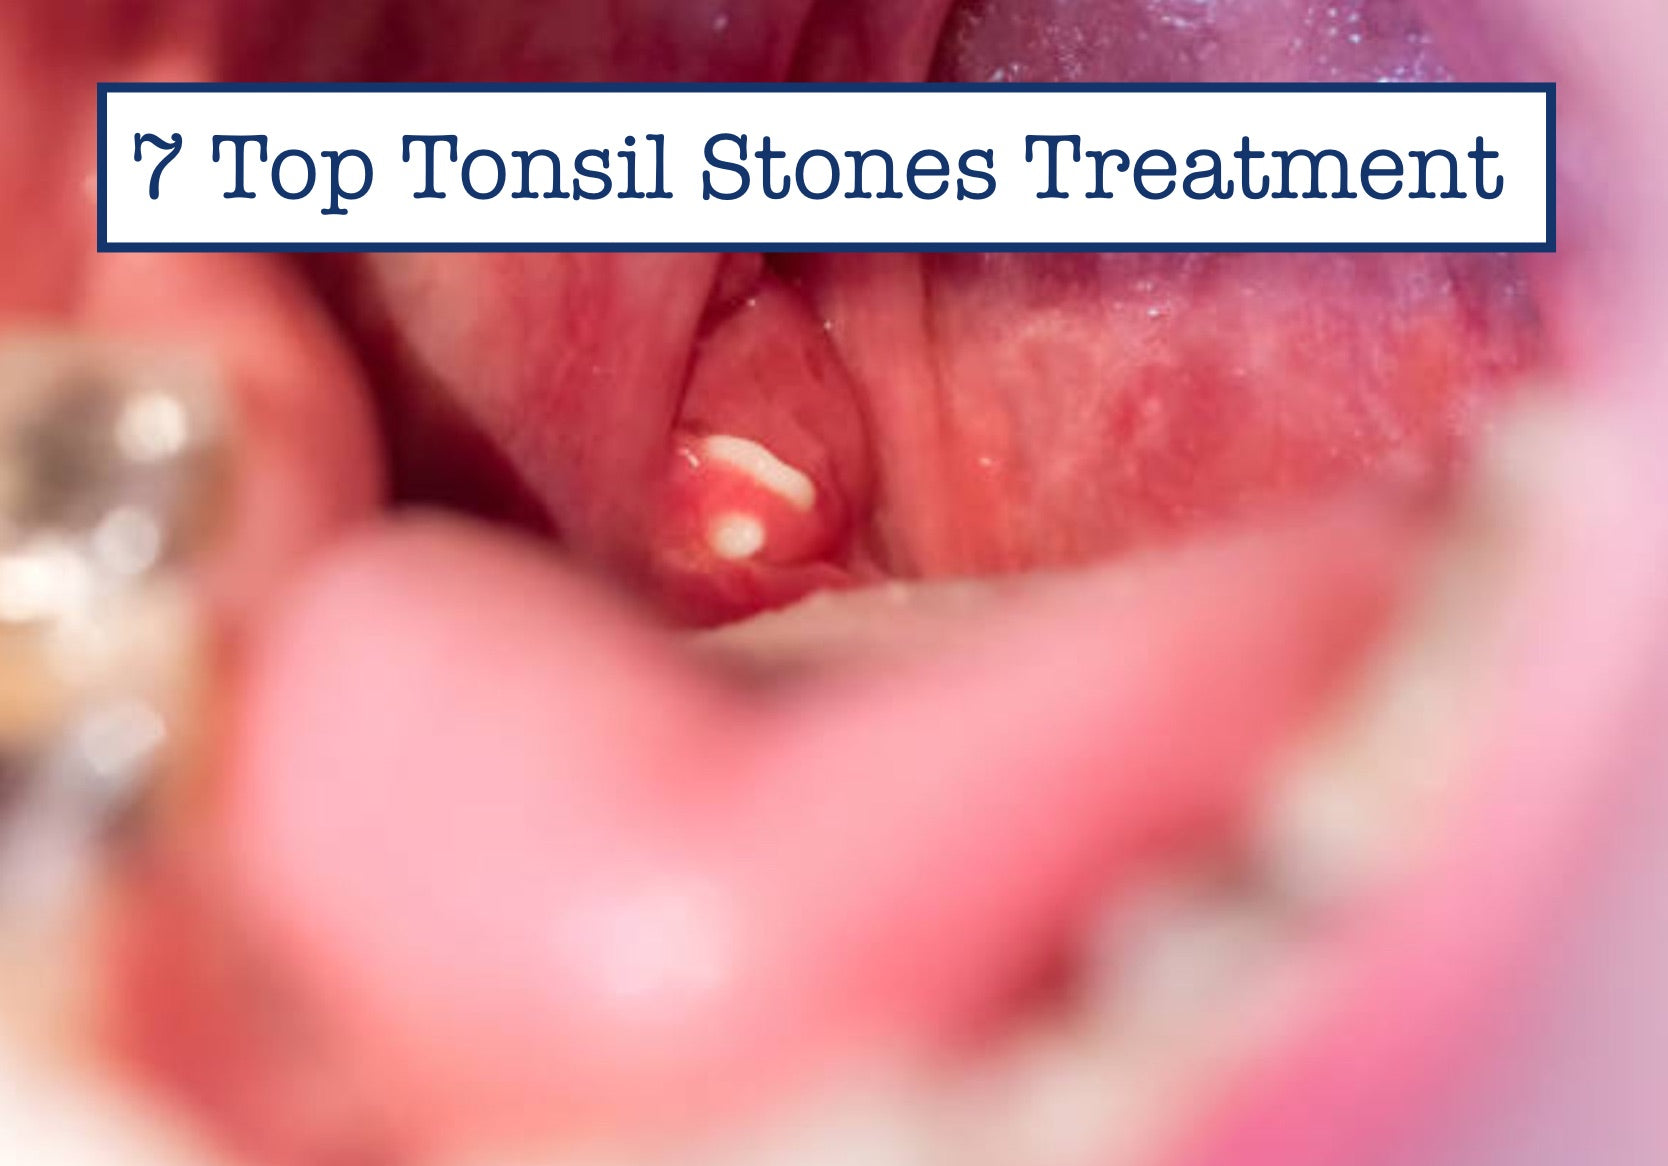 tonsillitis treatment at home